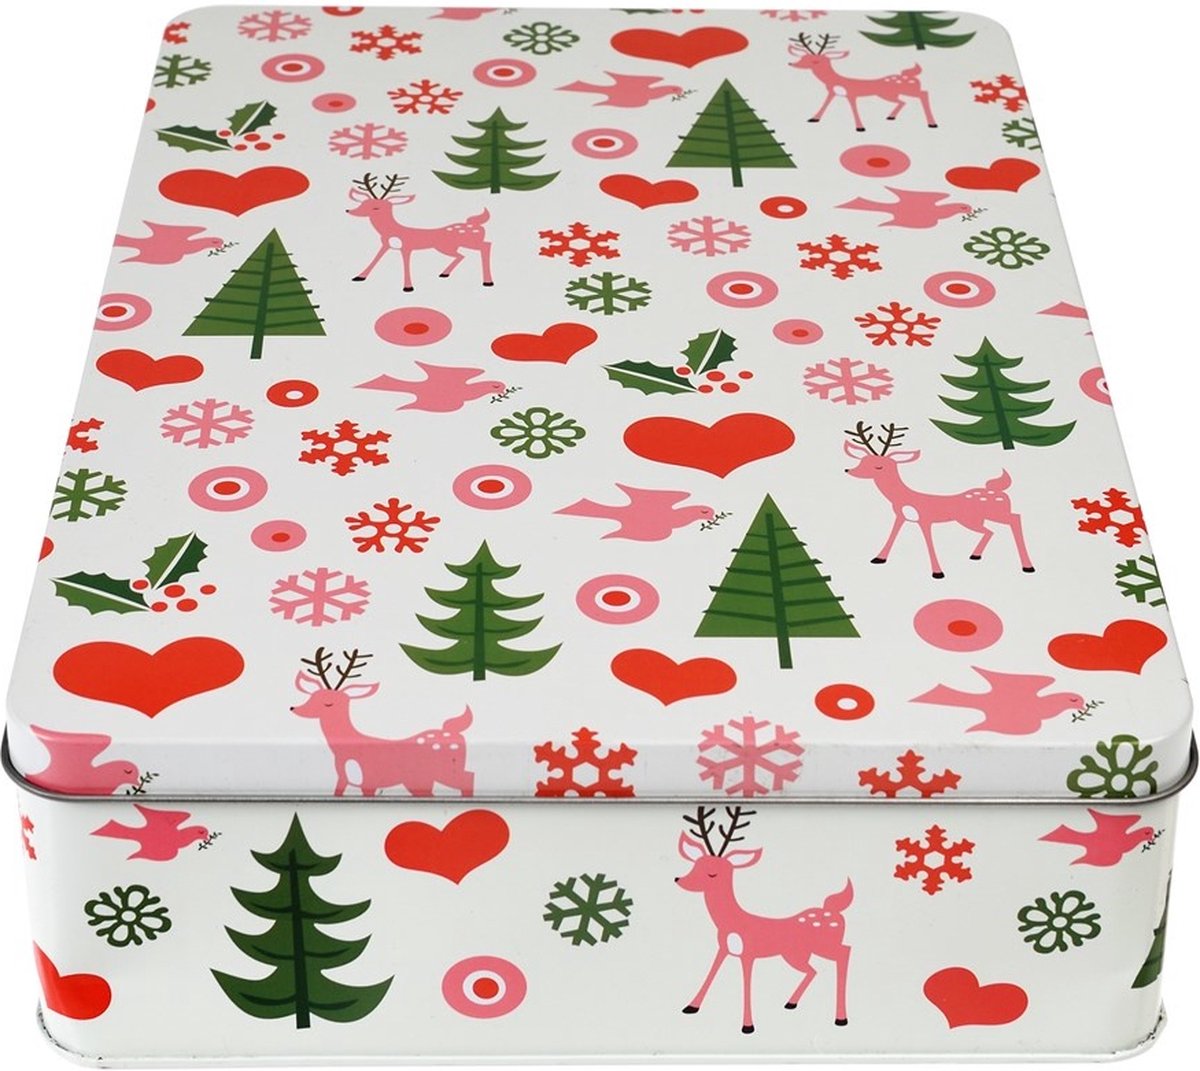 Rex London - Koekblik - Tin Square 50's Christmas - meerkleurig: roze-wit-zwart-groen-rood